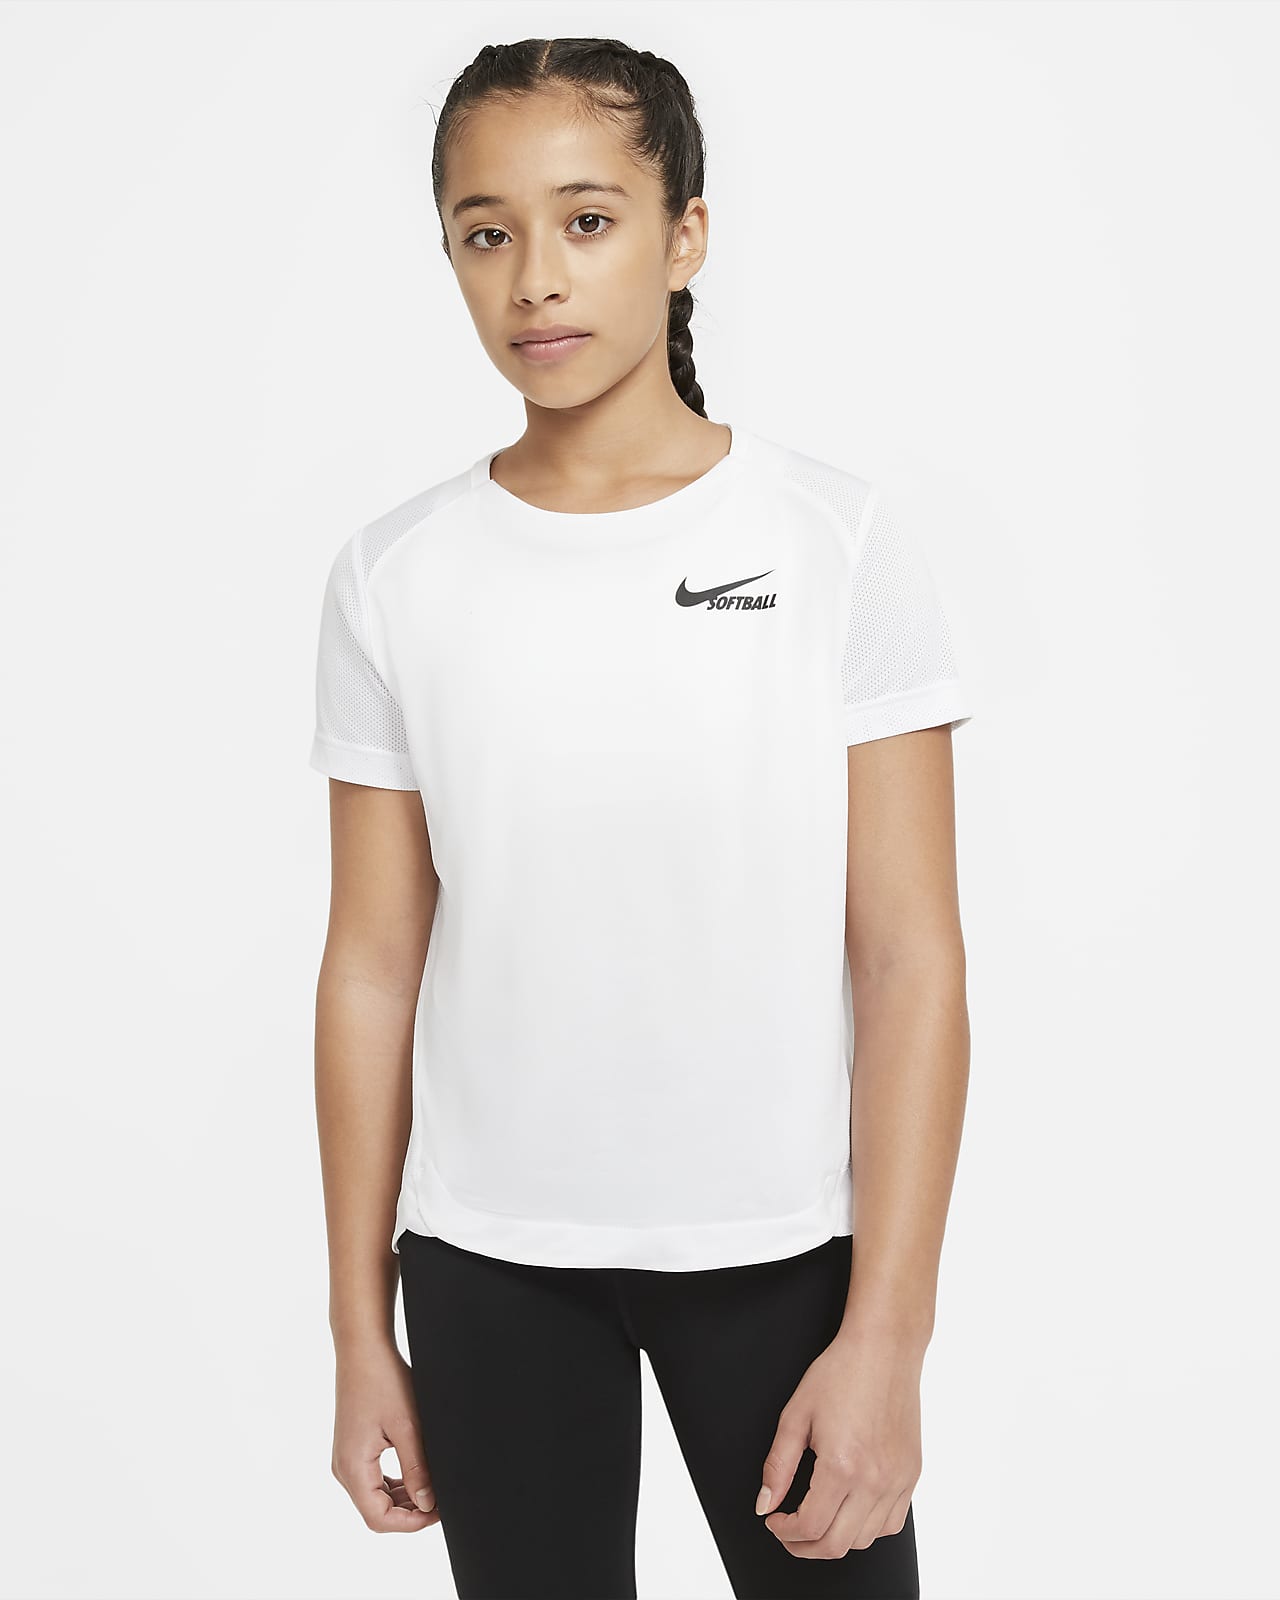 Nike Big Kids' (Girls') Short-Sleeve Softball Top